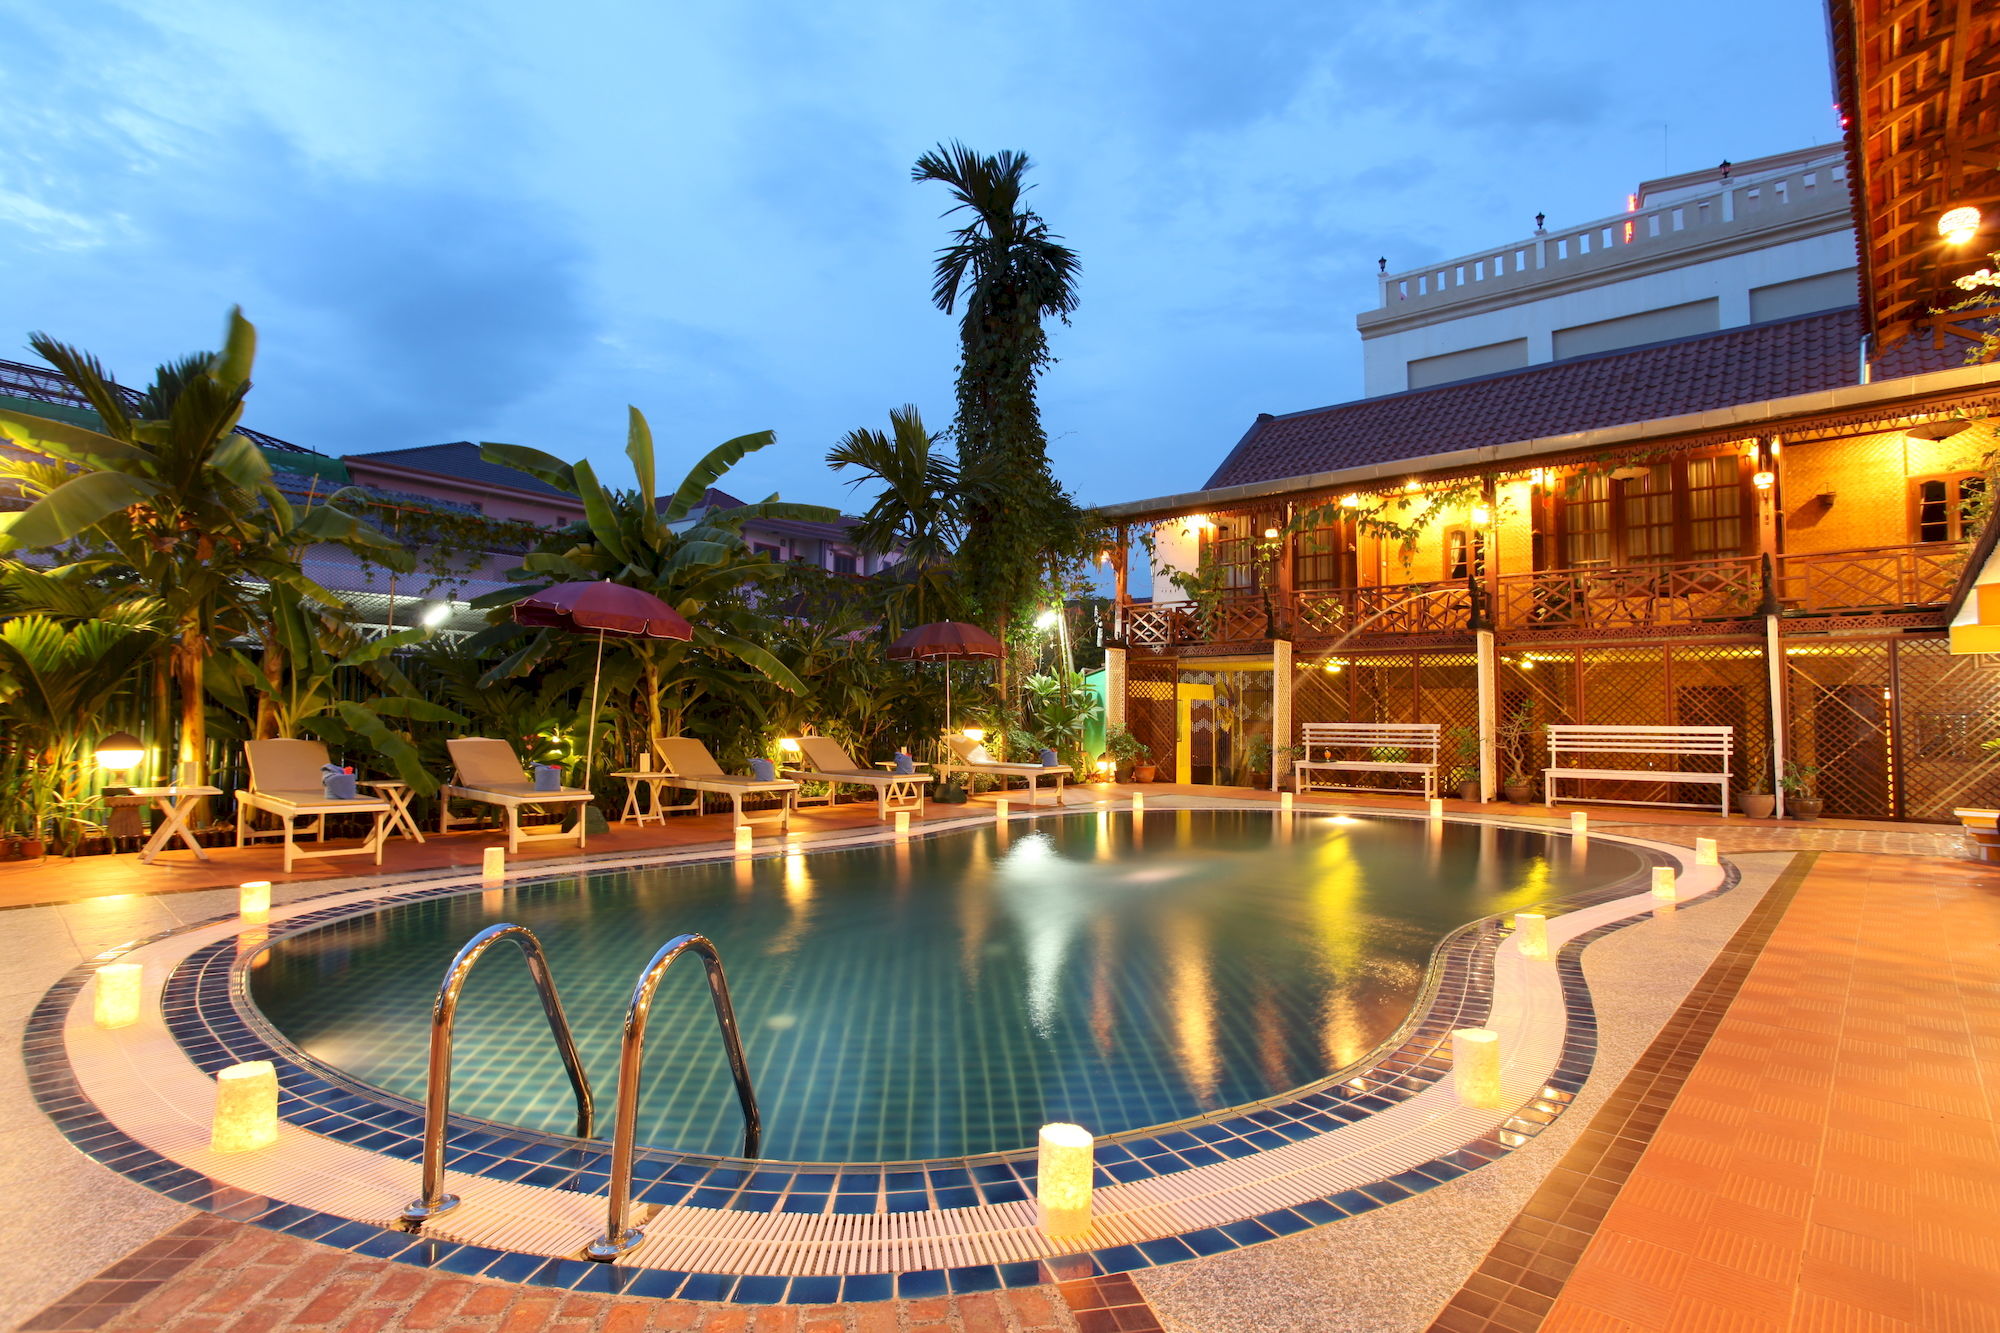 CHANDARA BOUTIQUE HOTEL - Laos - Vientiane